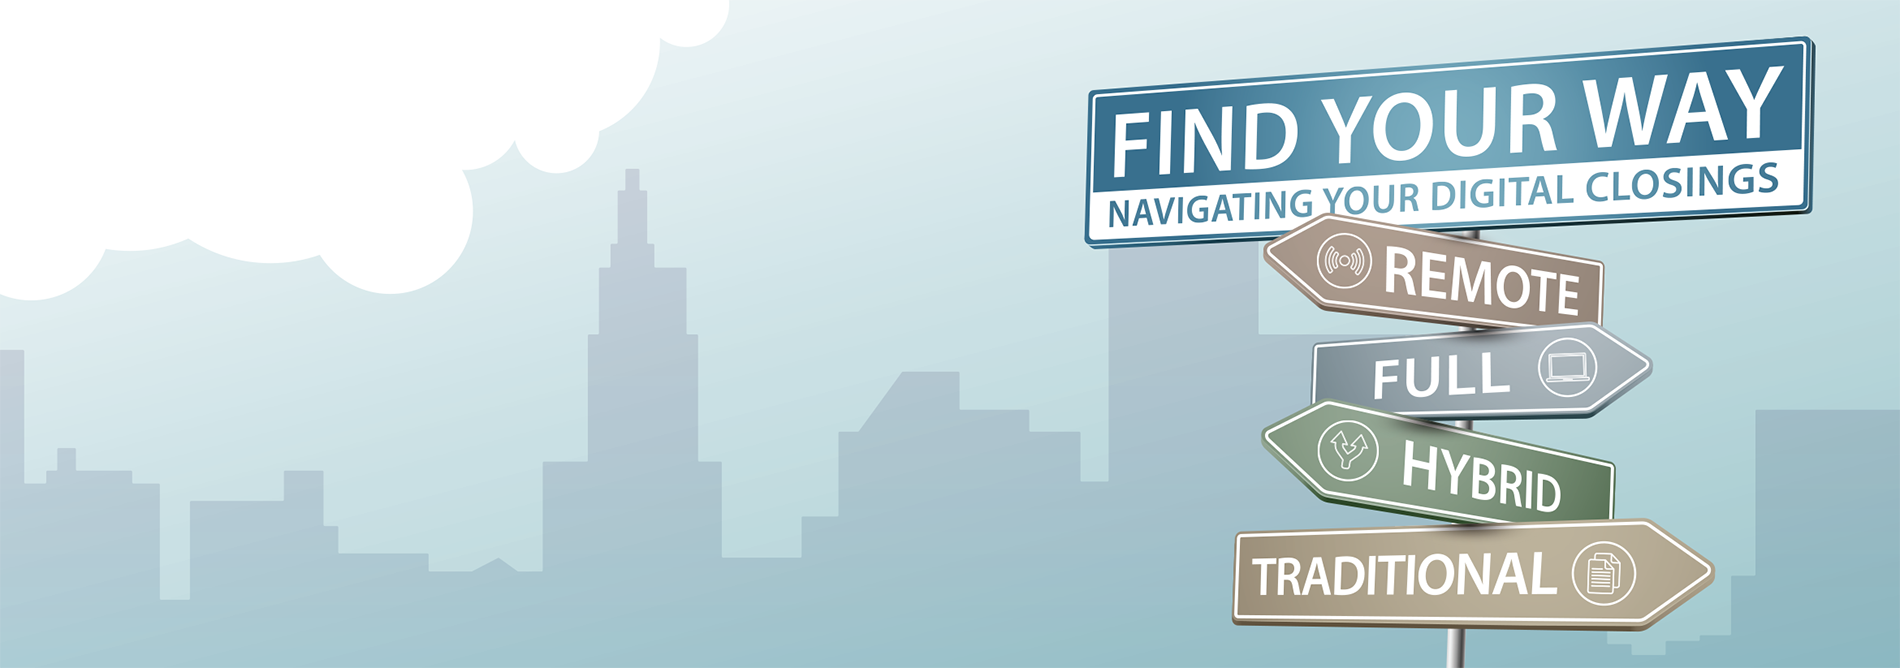 Eways - Find Your Way. Navigating your digital closings.